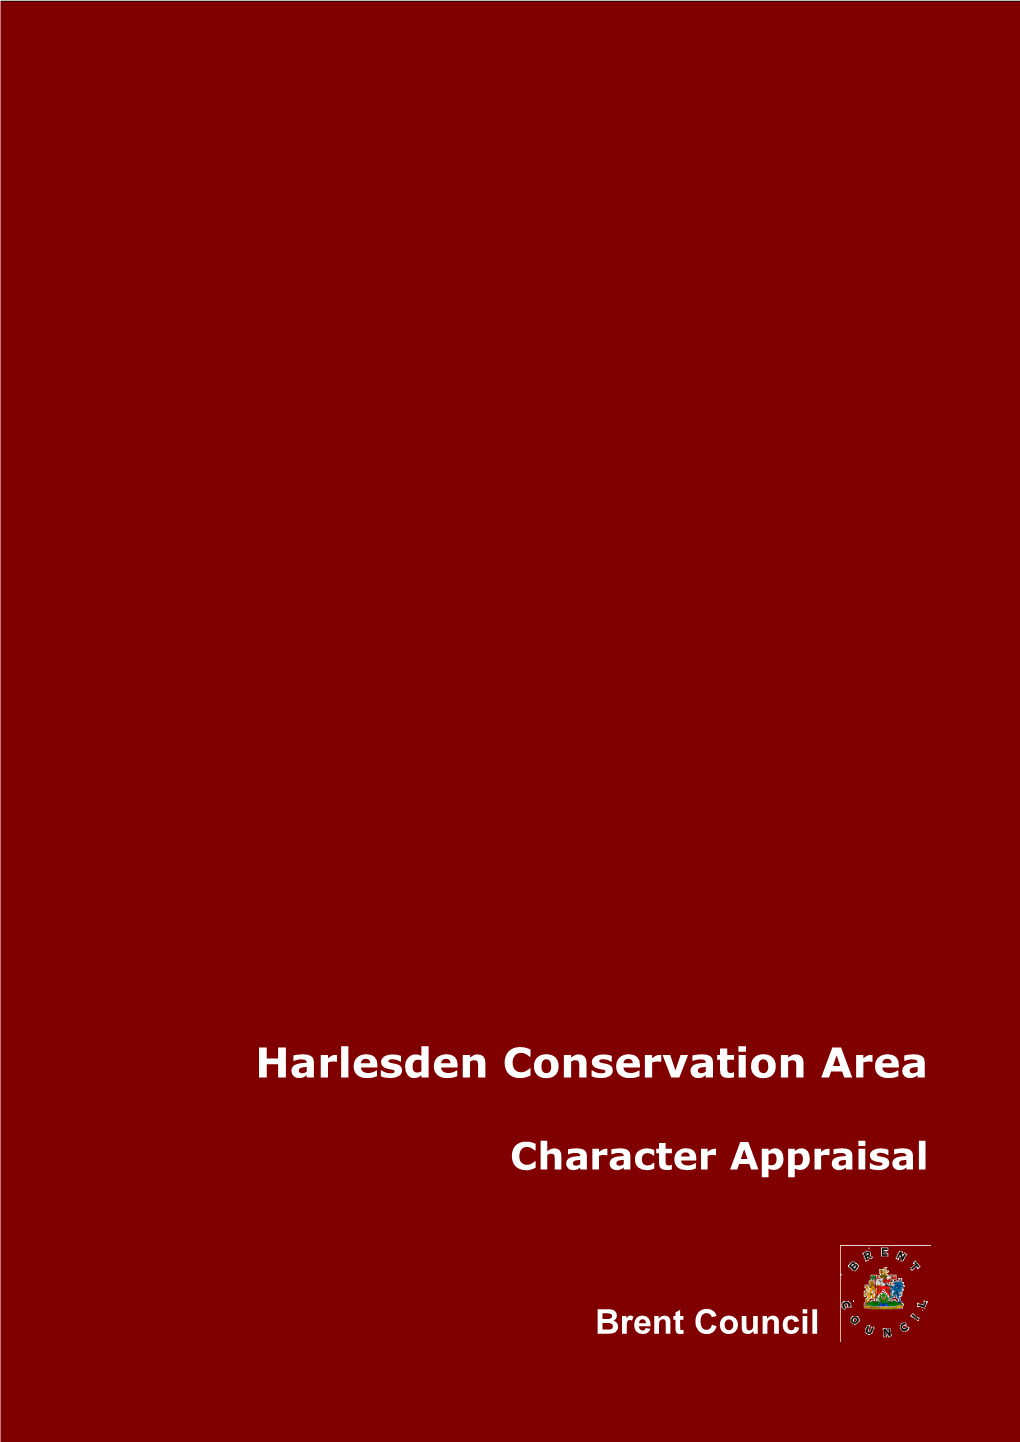 Harlesden Conservation Area Appraisal